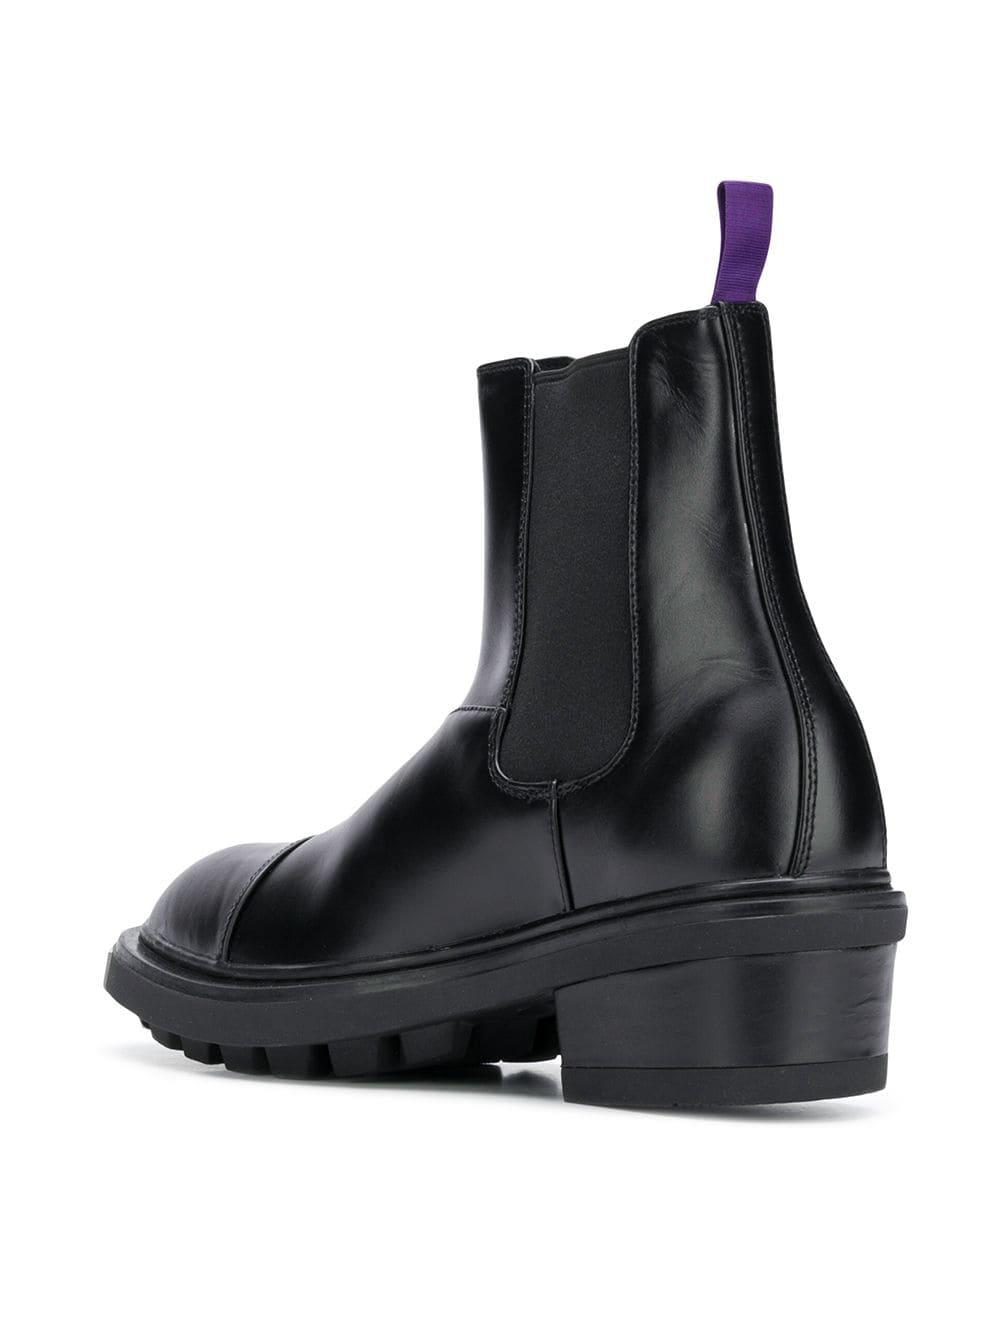 Eytys Leather Black Nikita Boots - Save 